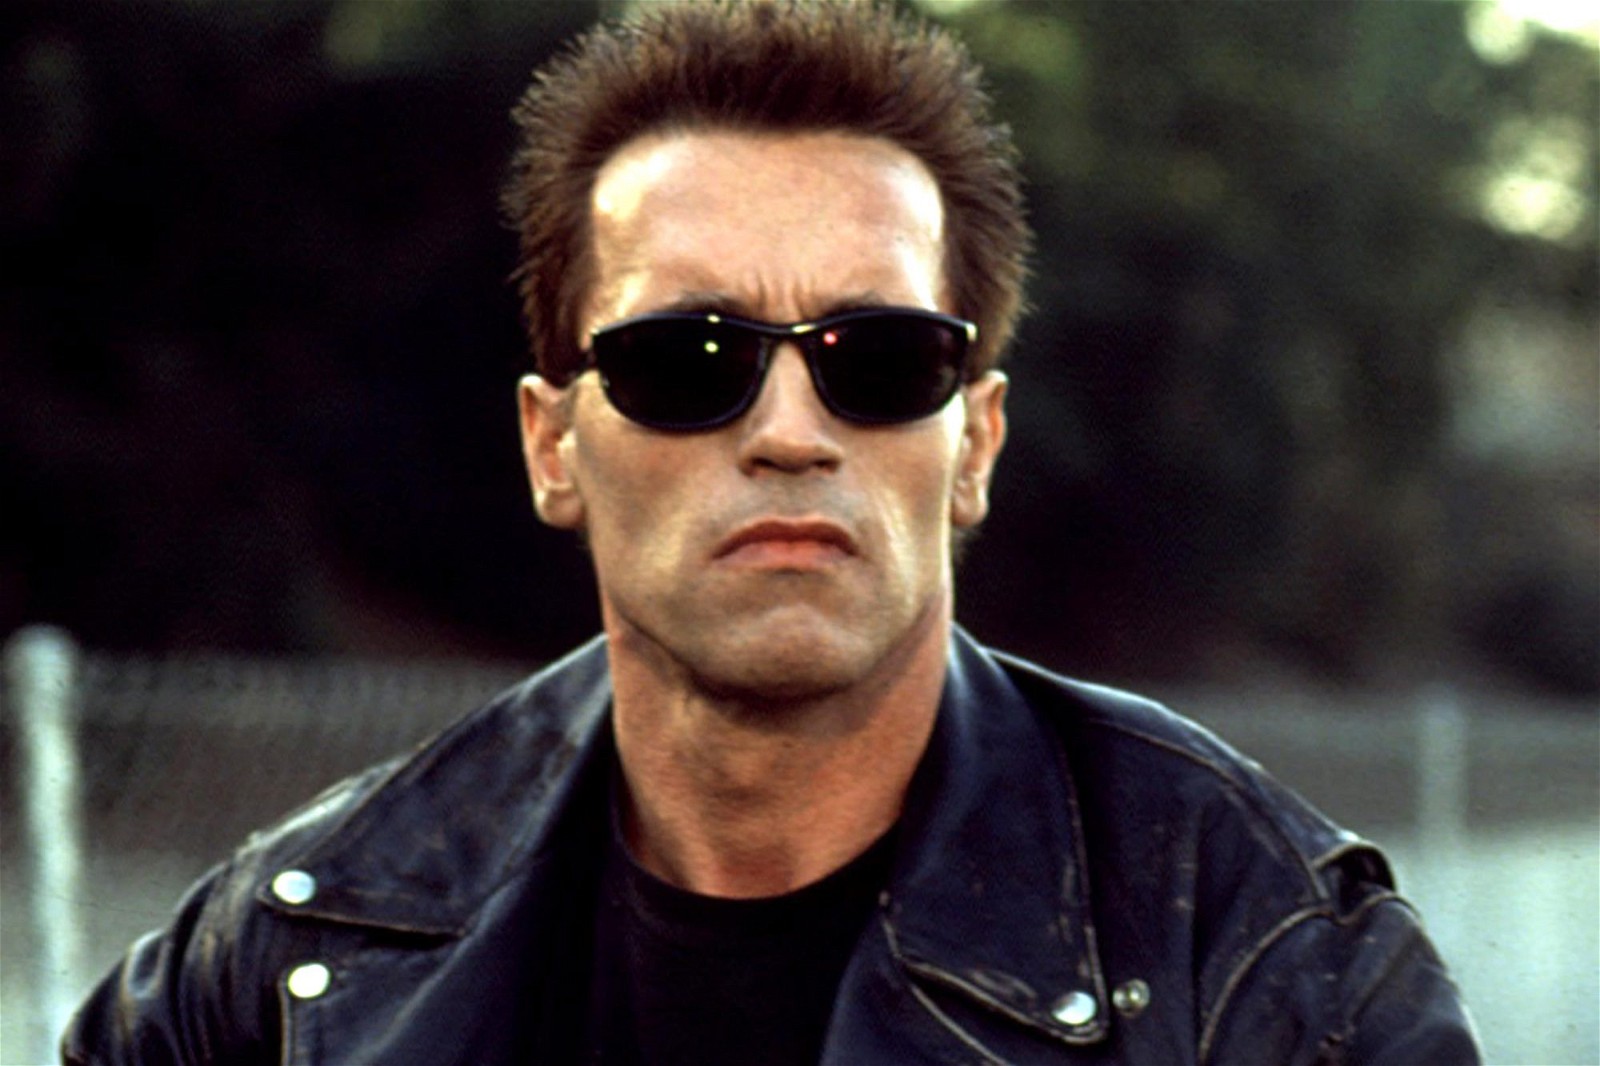 Arnold Schwarzenegger called his political rivals "girlie men"